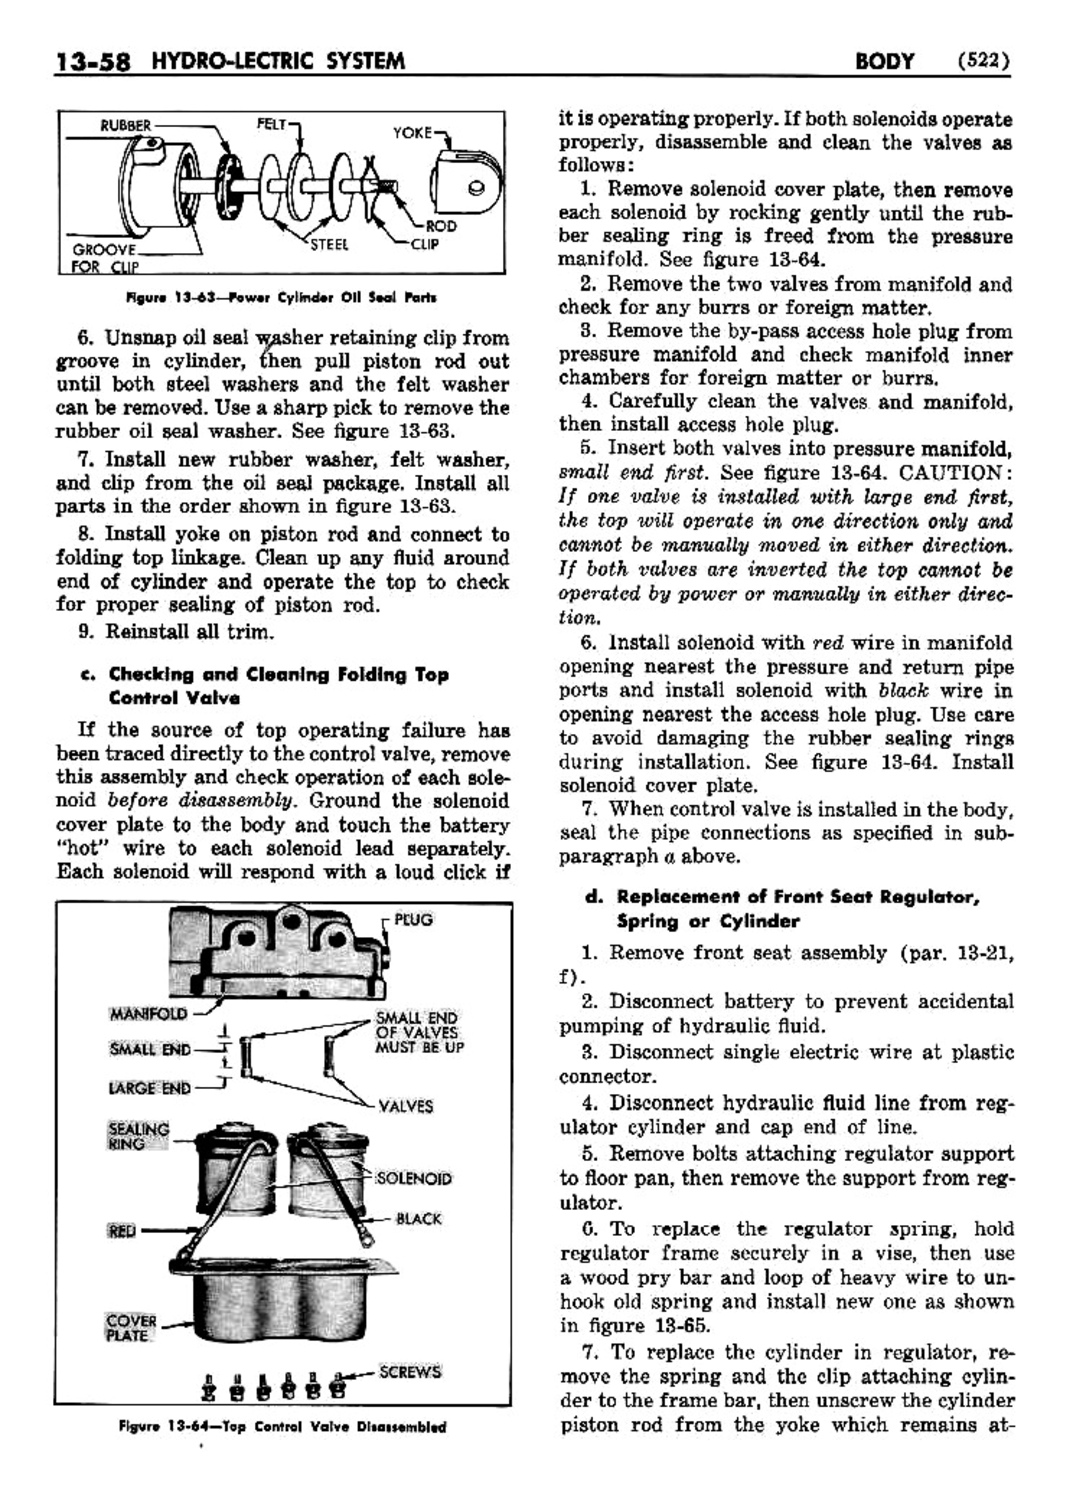 n_14 1952 Buick Shop Manual - Body-058-058.jpg